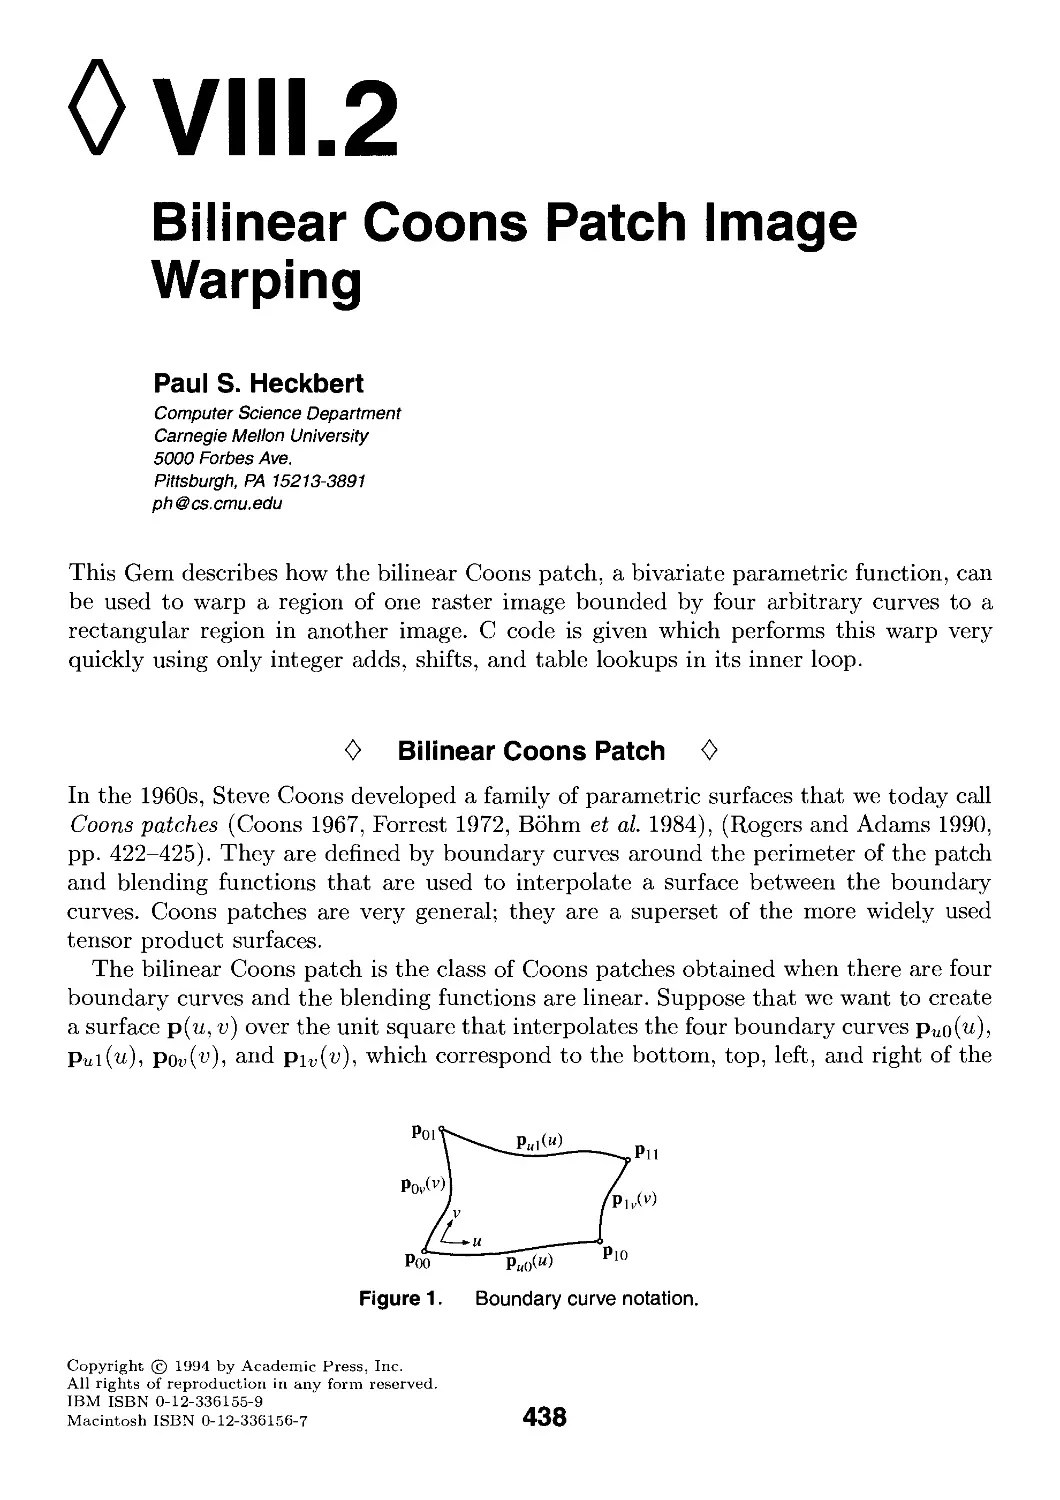 VIII.2. Bilinear Coons Patch Image Warping by Paul S. Heckbert